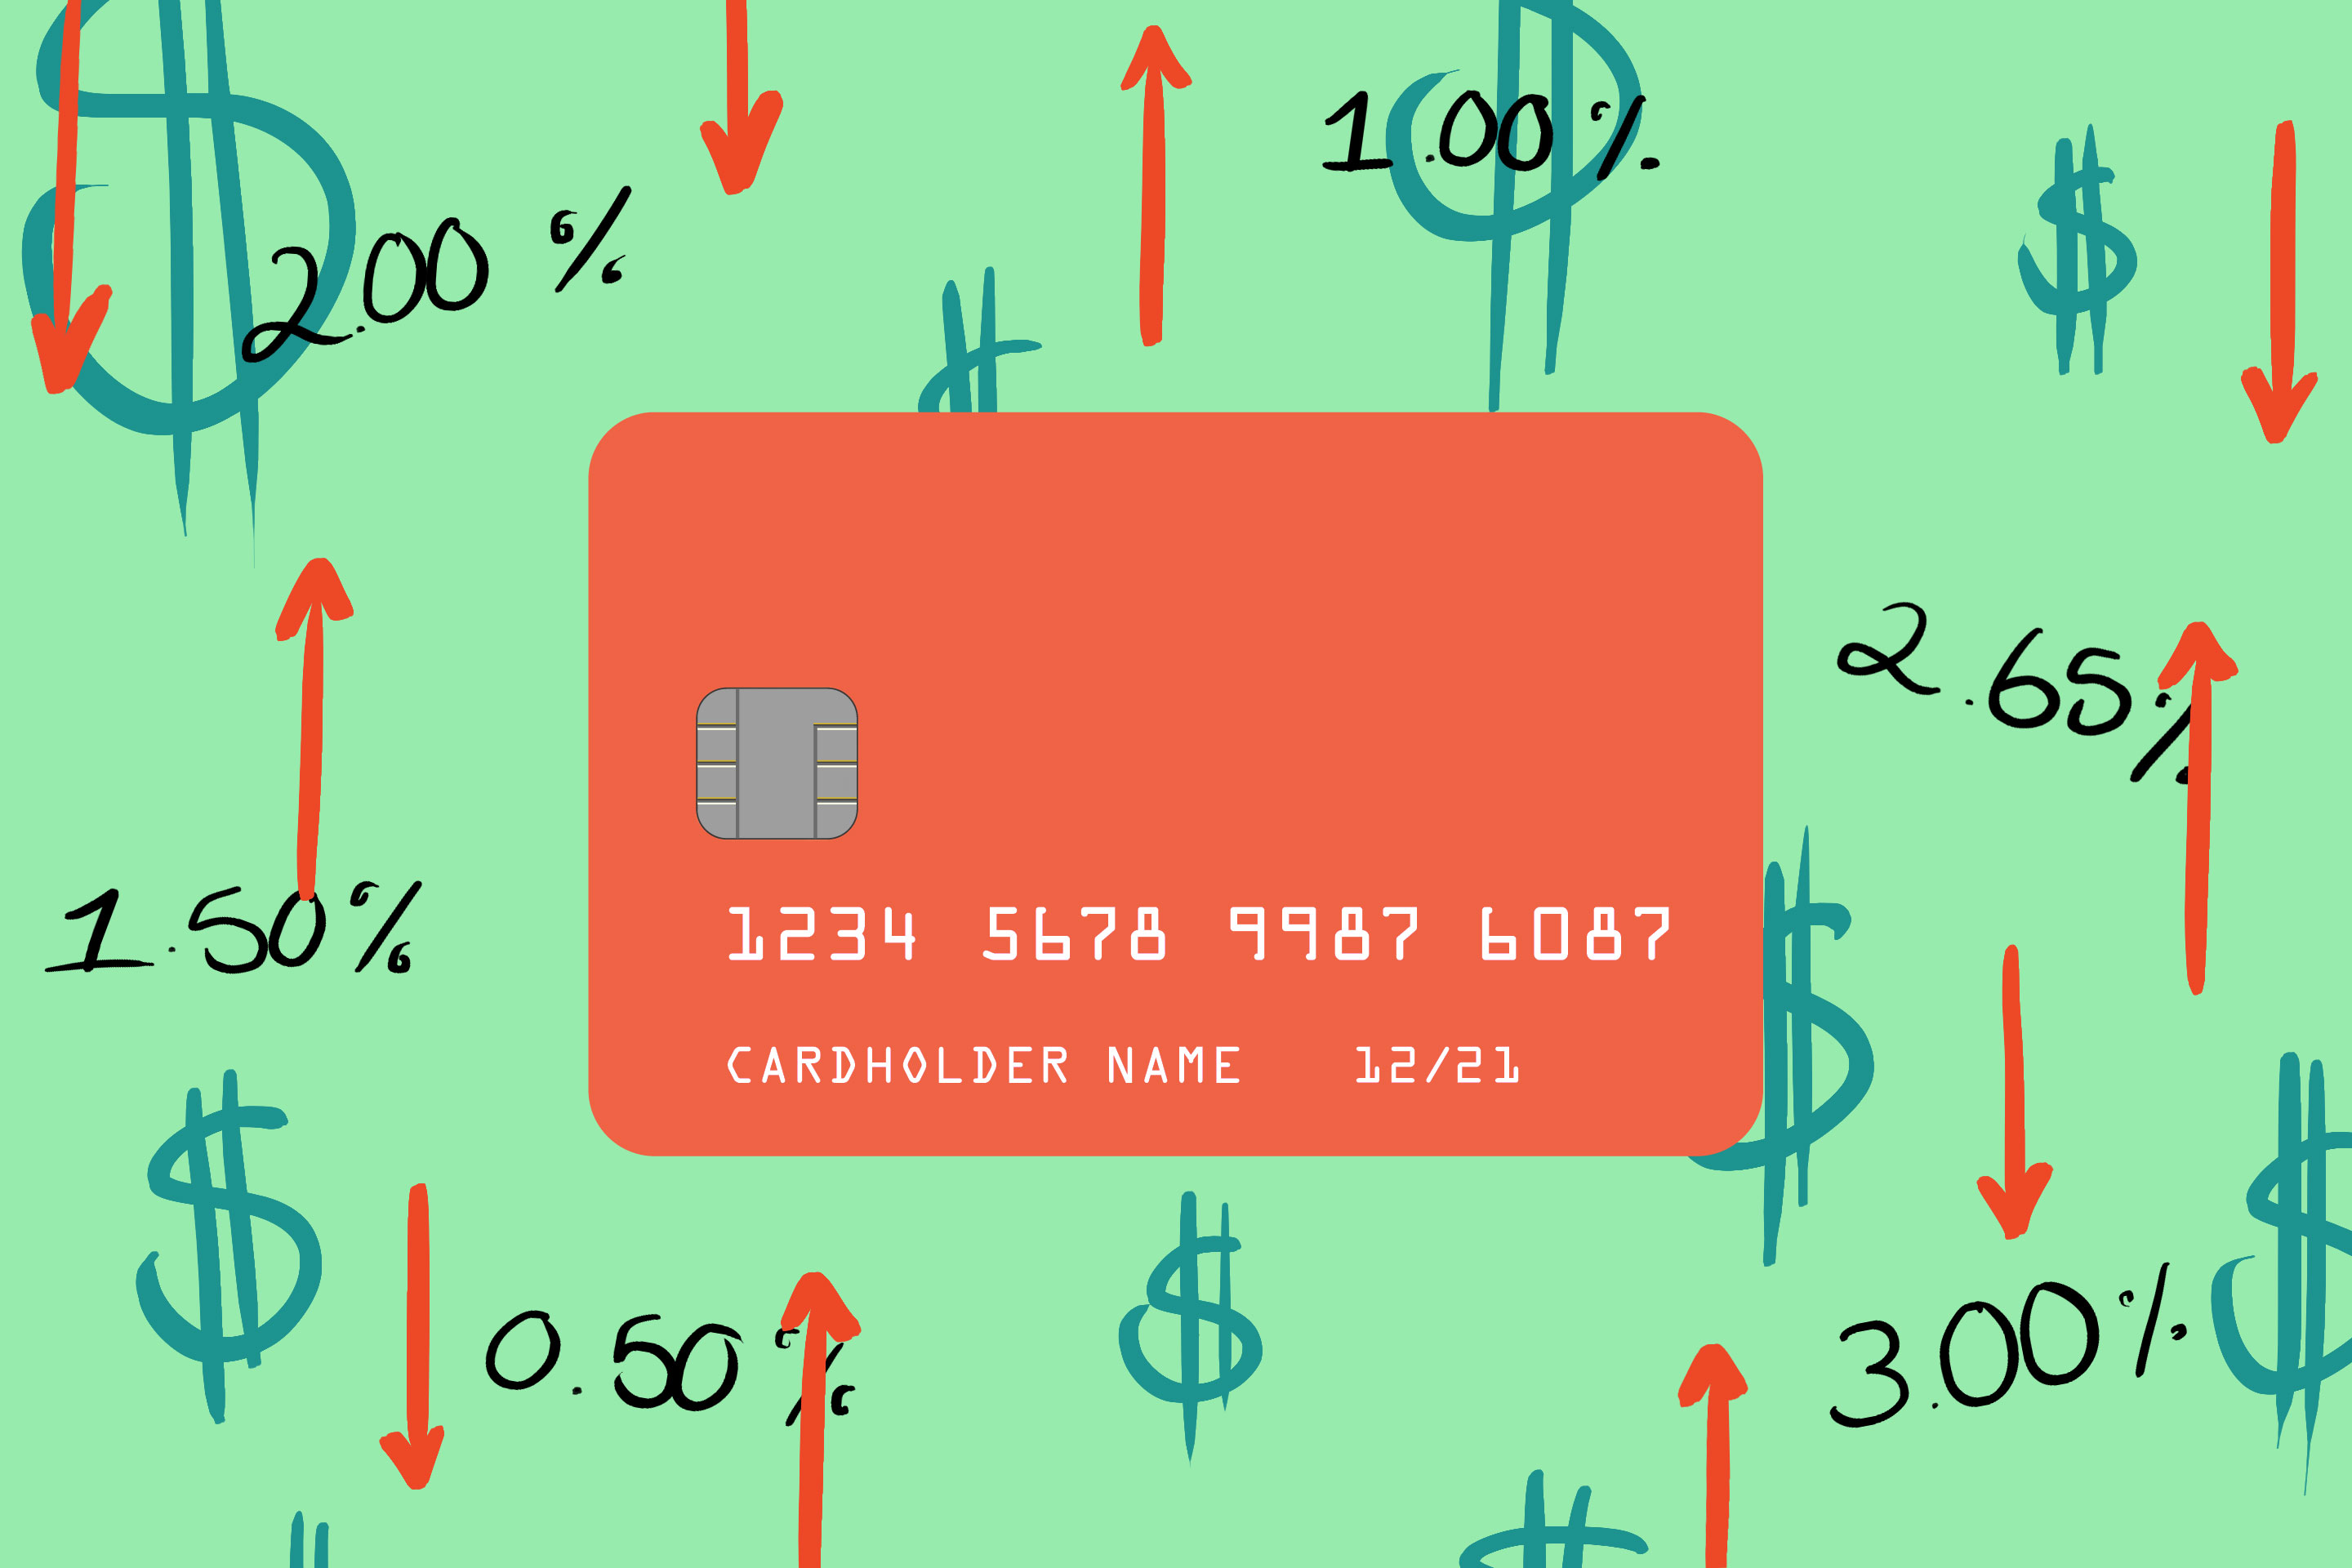 Credit card fees